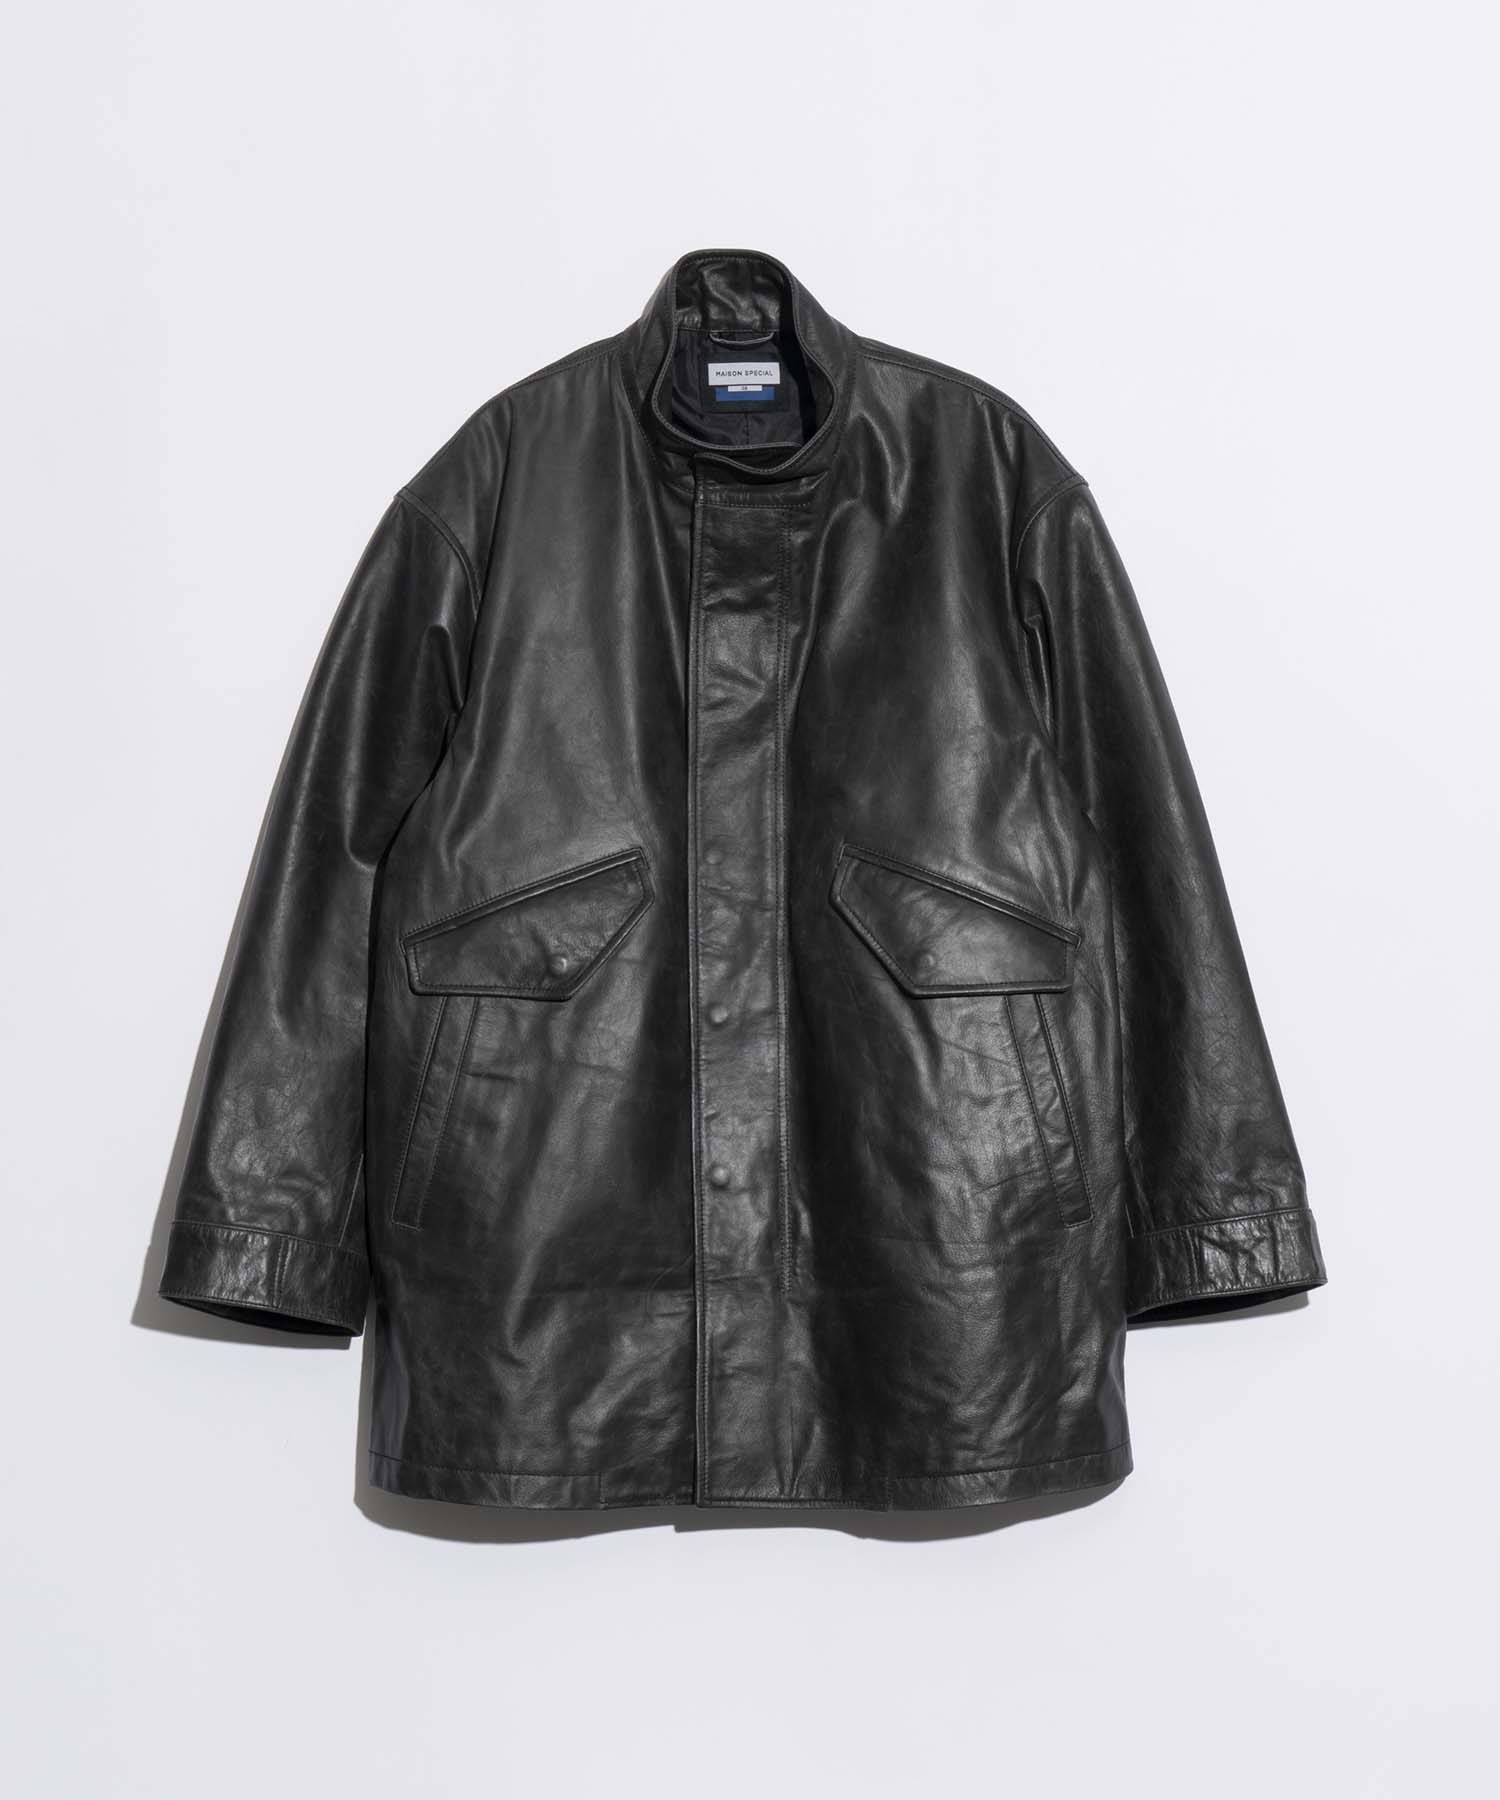 【SALE】Buffalo Crack Leather Dress-Over Short Mods Coat